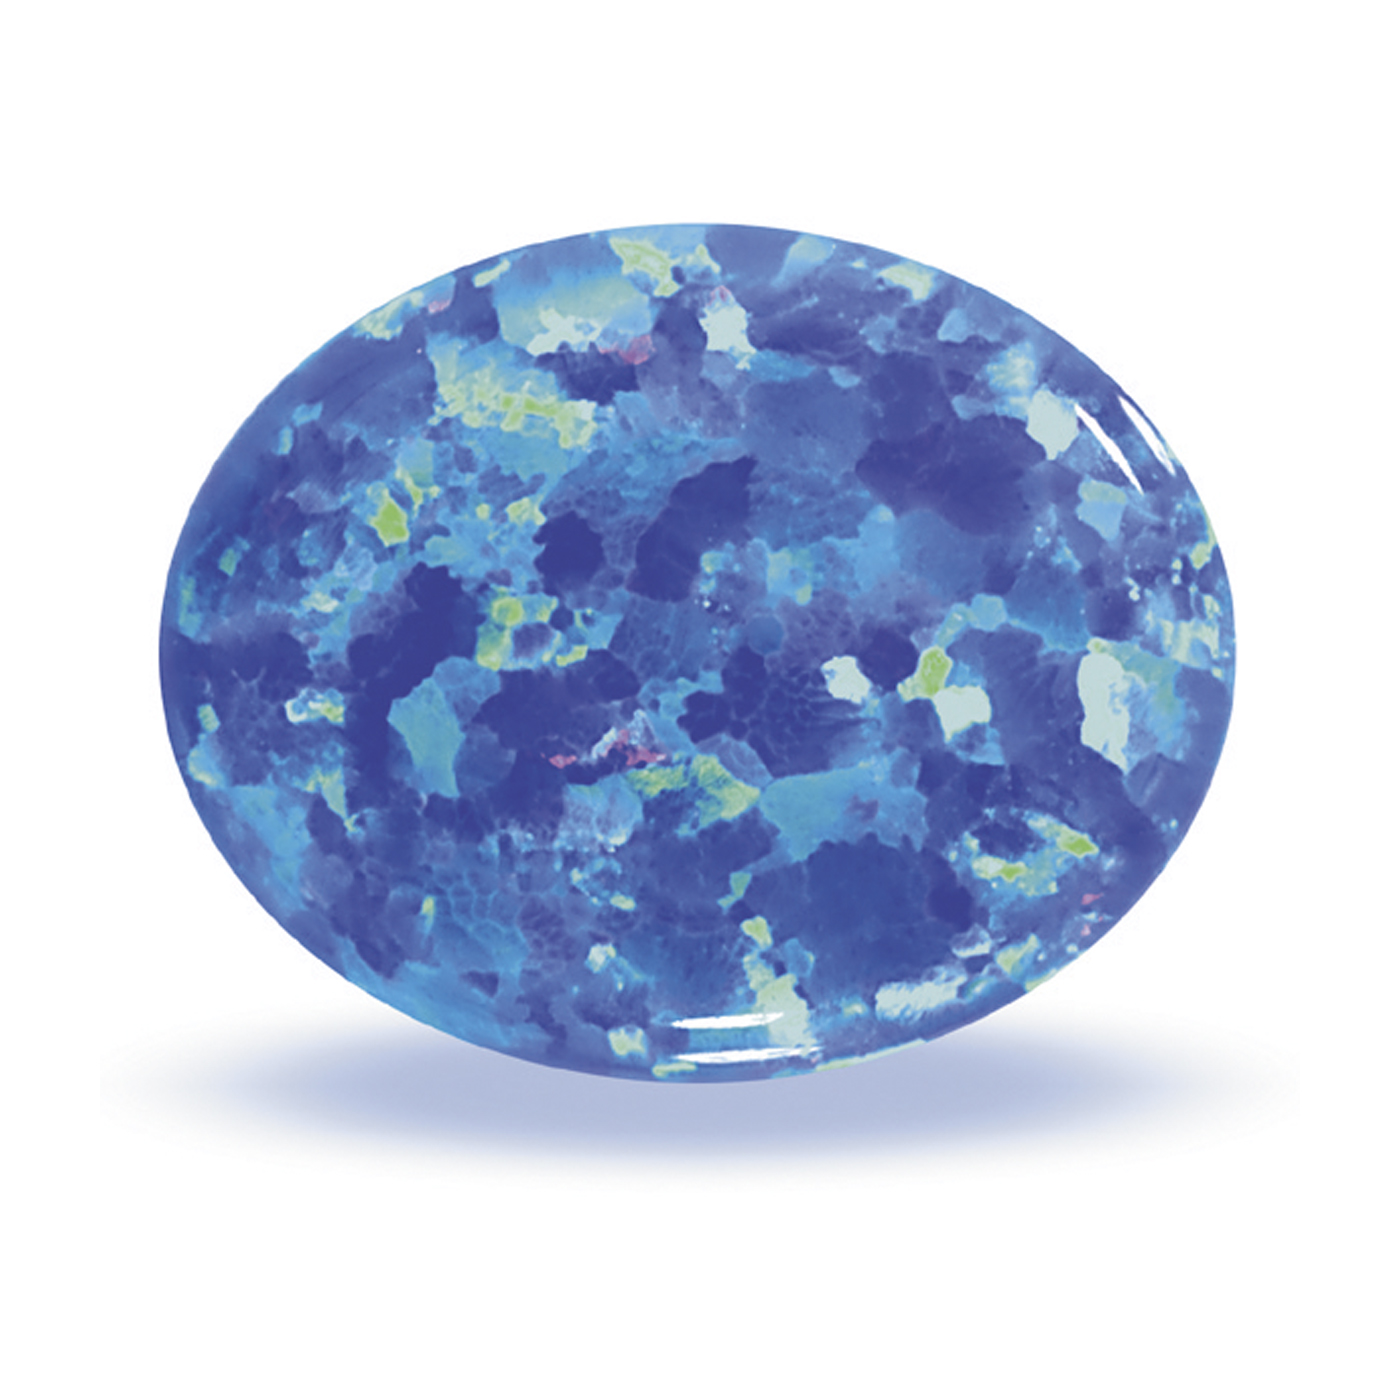 Opal Imitation, Blue, Oval Cabochon, 8.00 x 6.00 mm - 1 piece